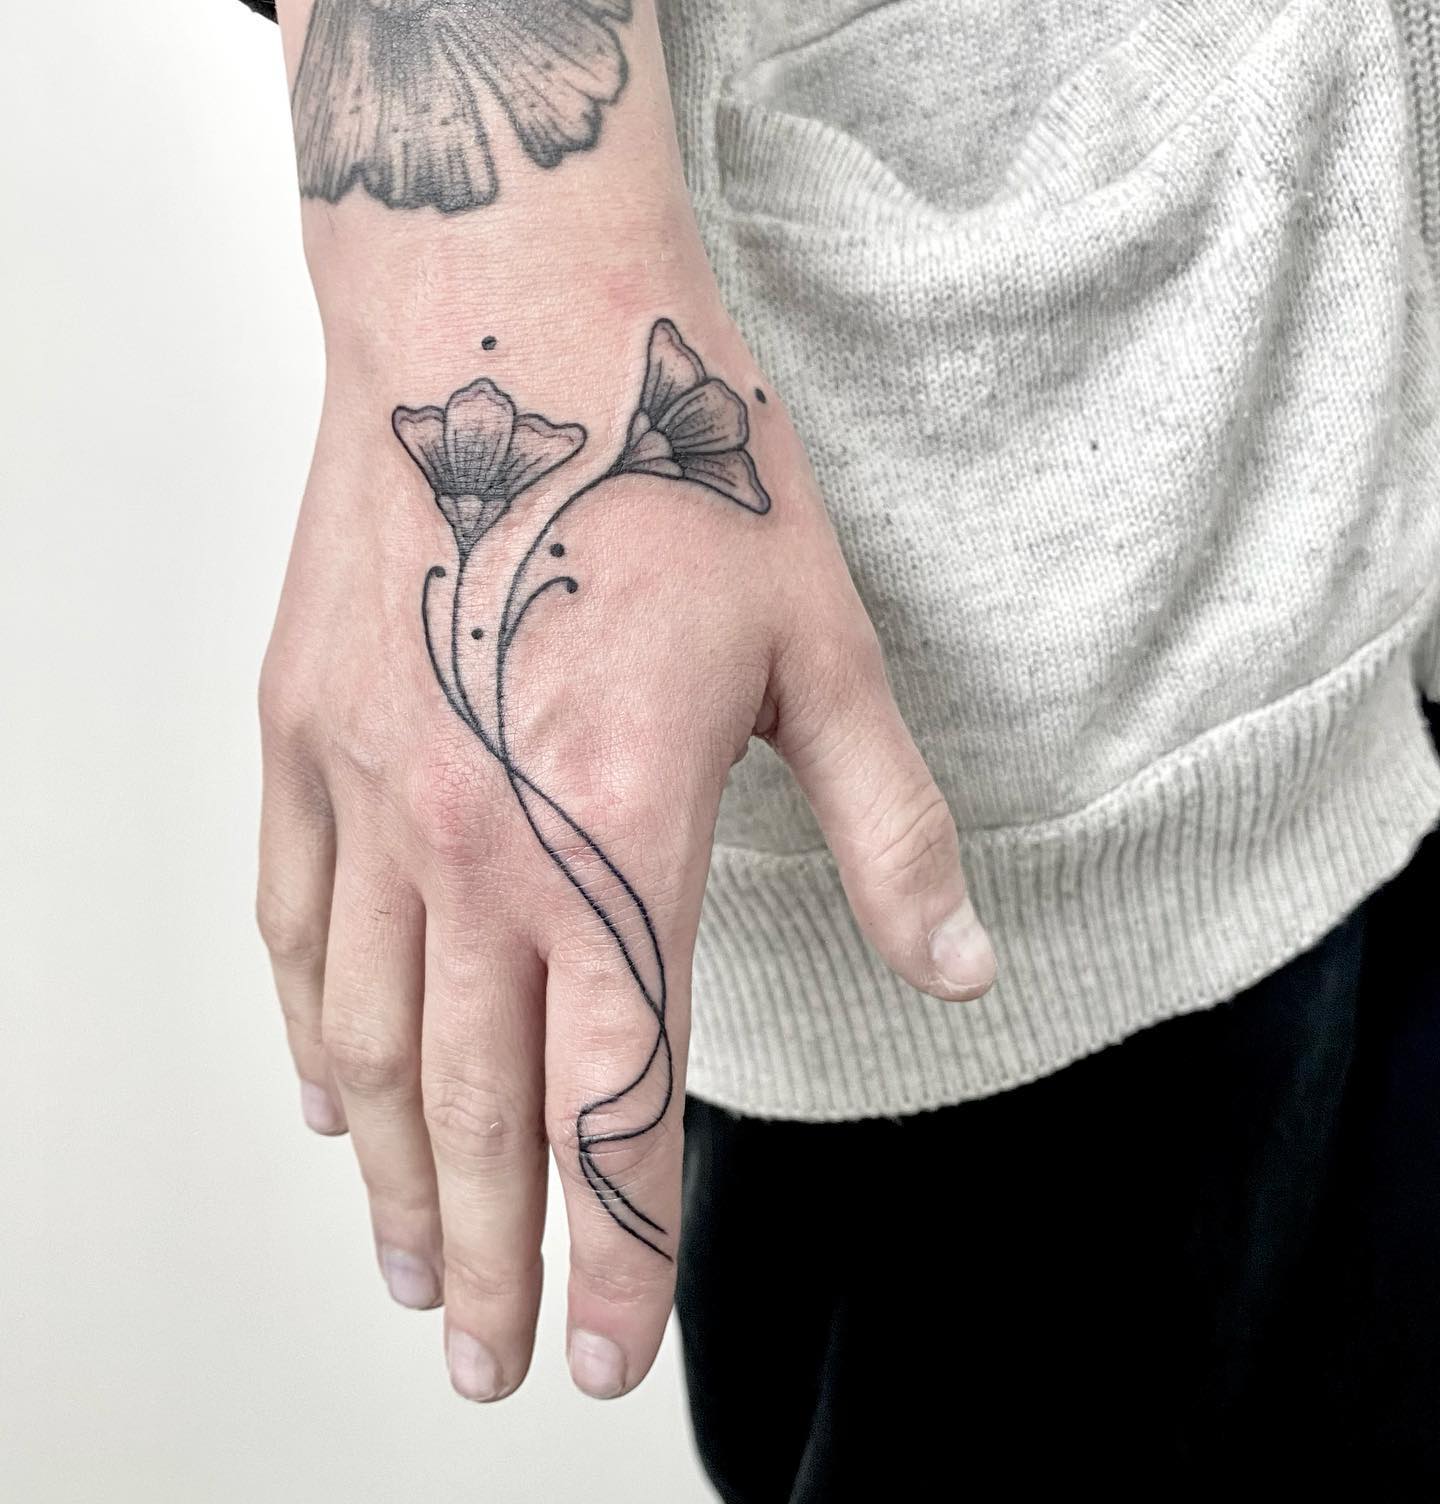 1000 Dank Meike! 
.
.
.
#tattoos #blacktattoo #flowertattoo #germantattooers #co